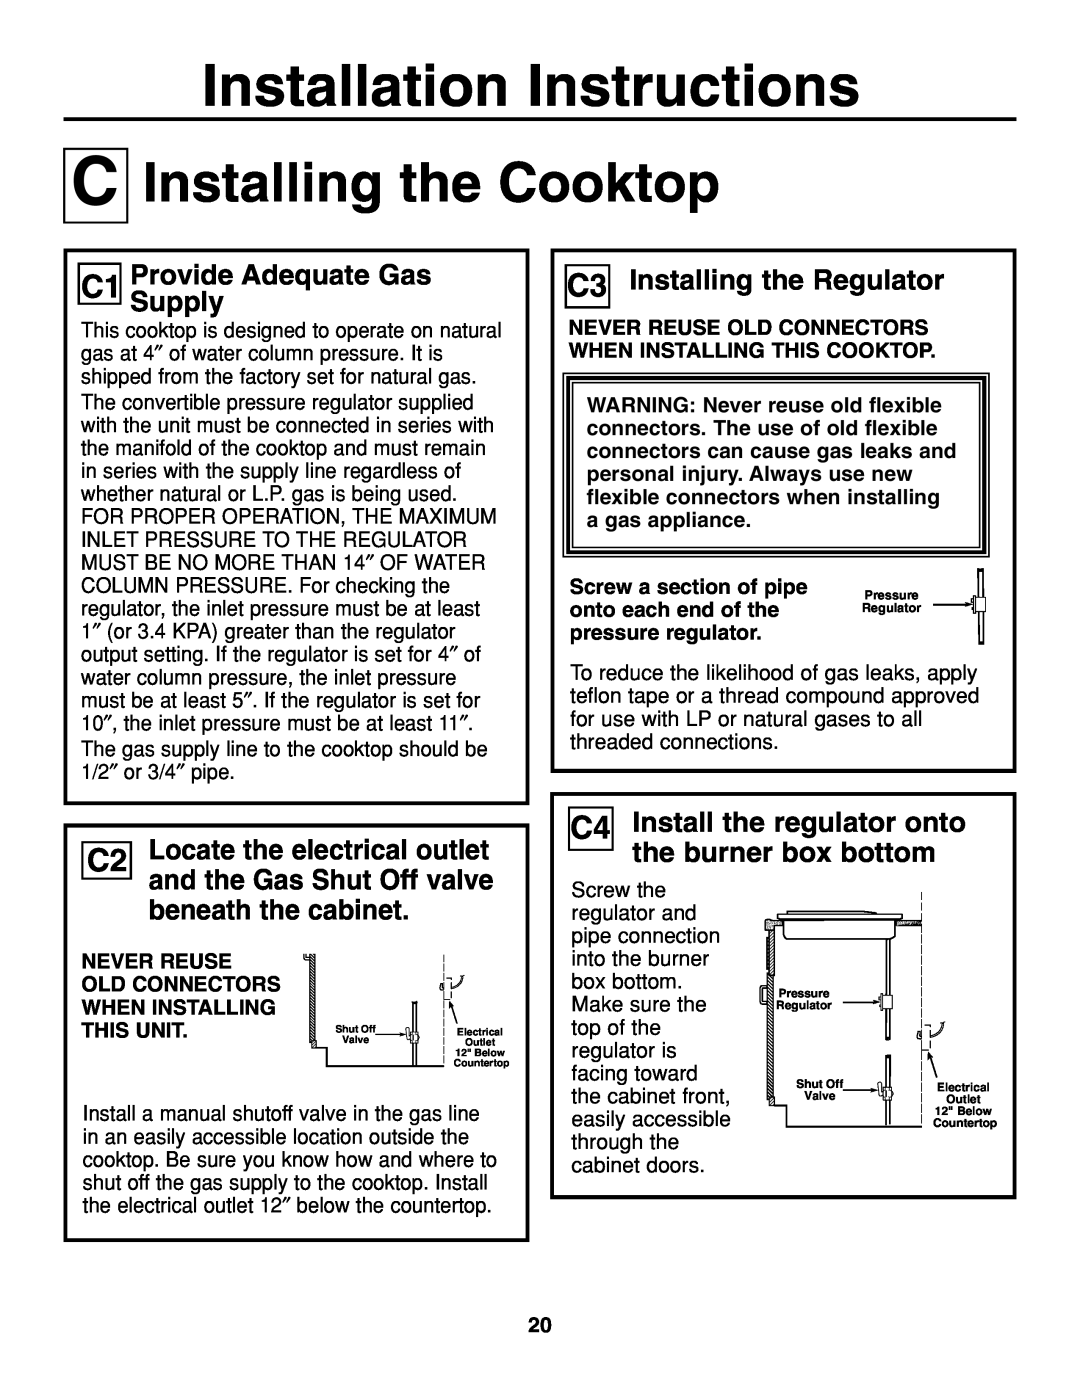 GE JGP637 C Installing the Cooktop, C1 ProvideSupply Adequate Gas, C3 Installing the Regulator, beneath the cabinet 